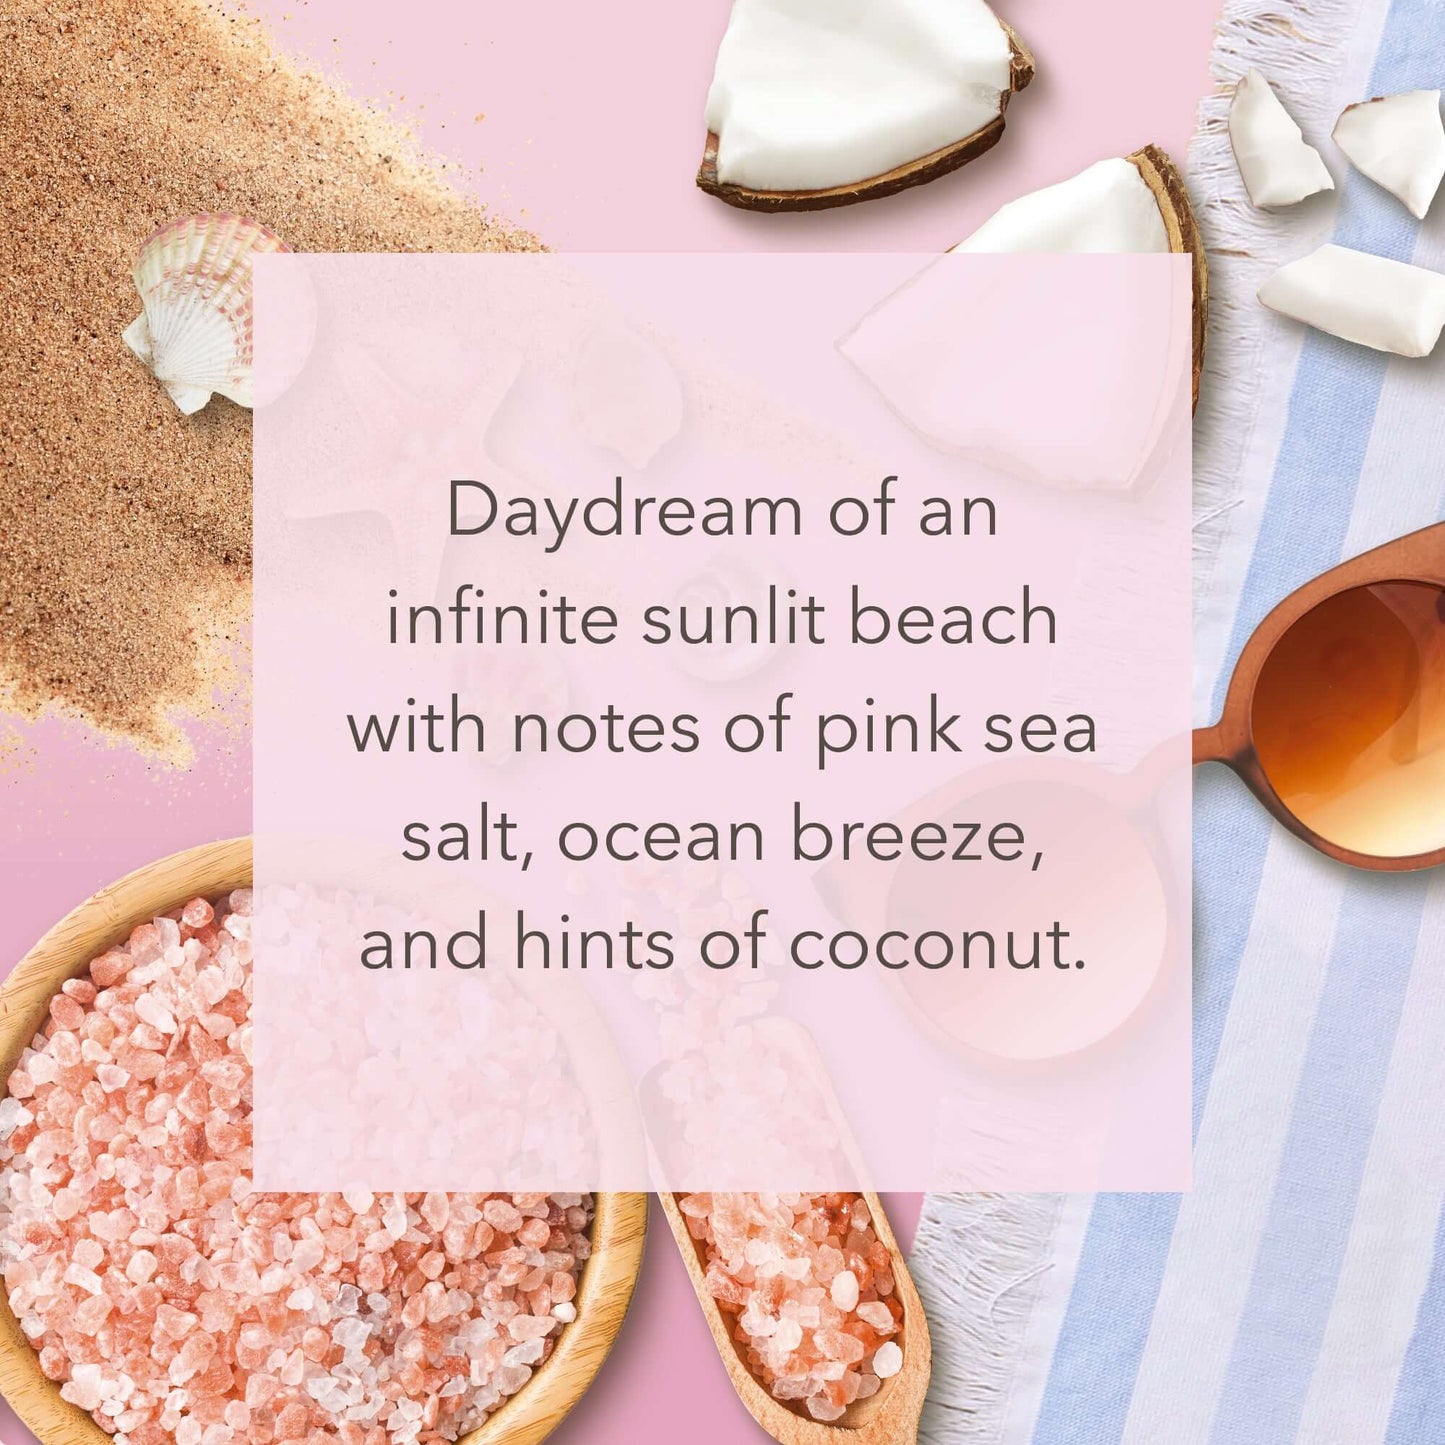 Summer Daydream Medium Jar Daydream of an infinite sunlit beach with notes of pink sea salt, ocean breeze, and hints of coconut.